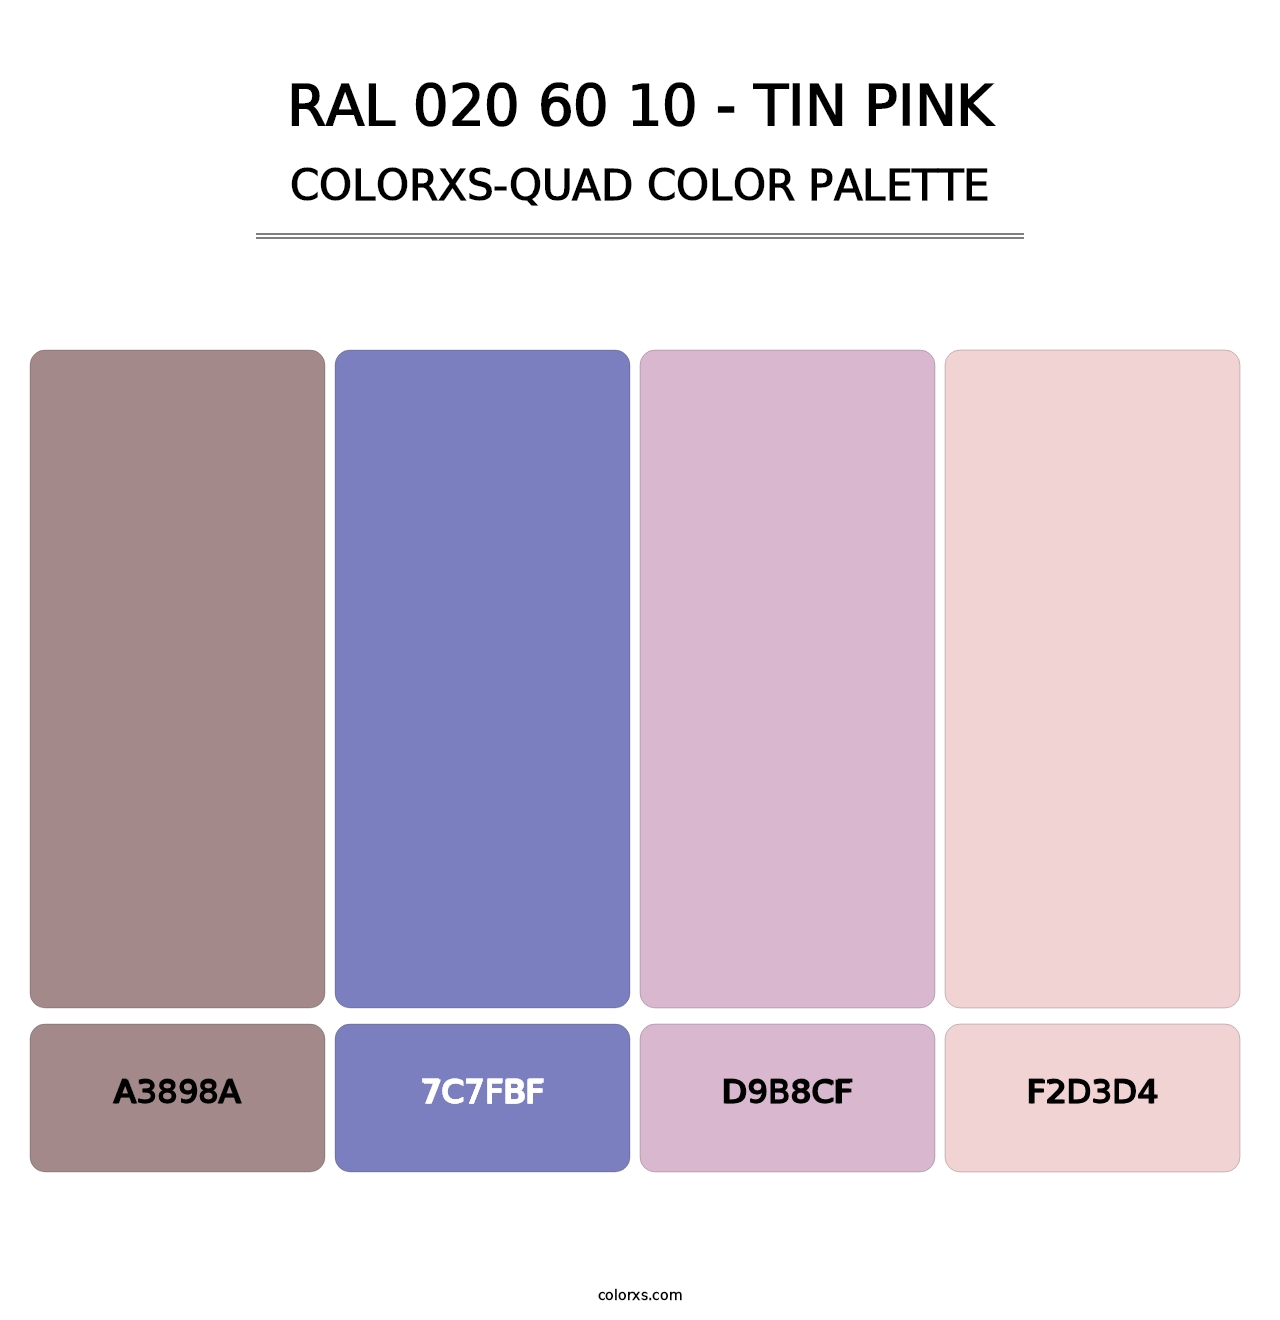 RAL 020 60 10 - Tin Pink - Colorxs Quad Palette